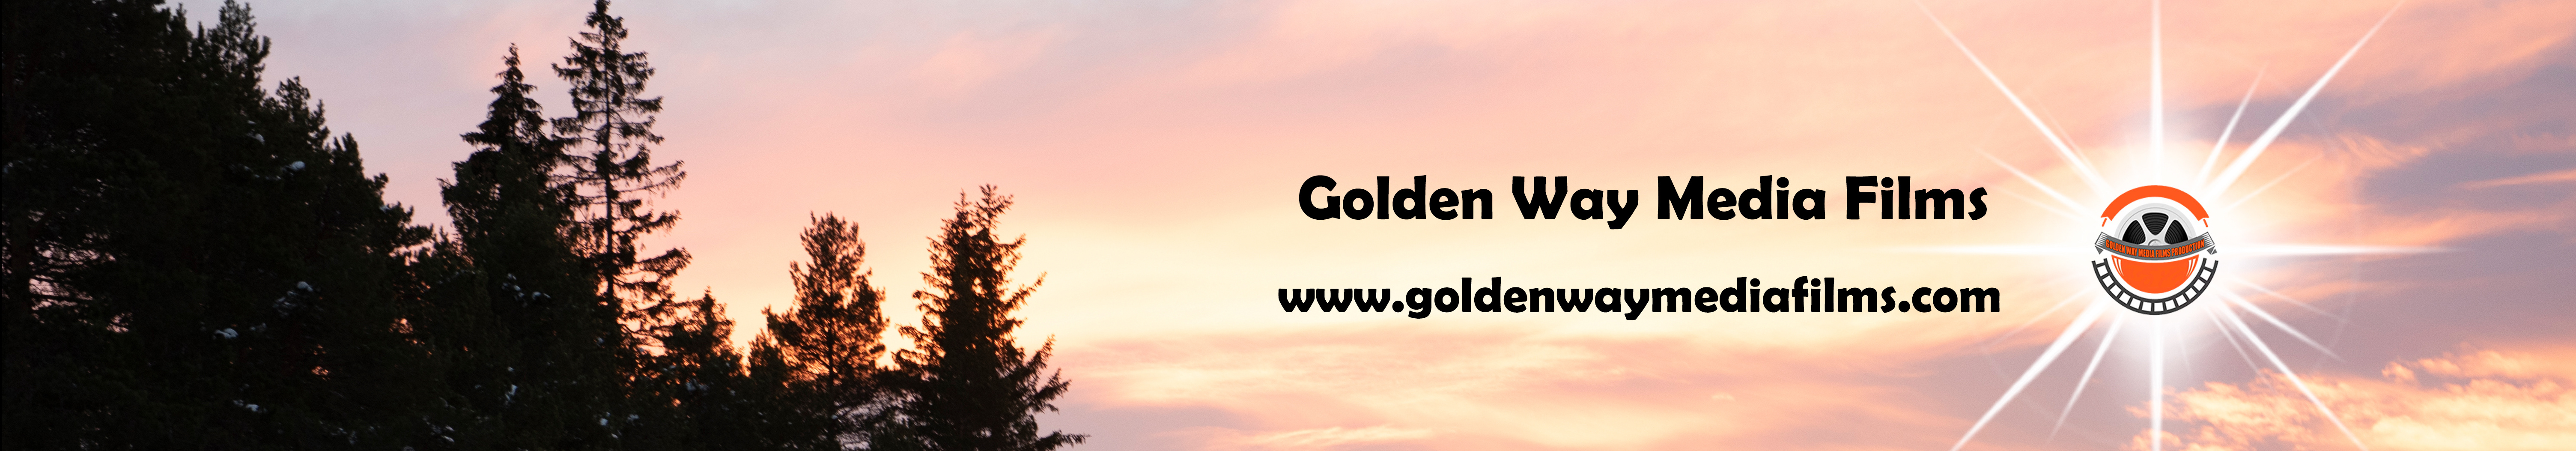 Golden Way Media Films's profile banner